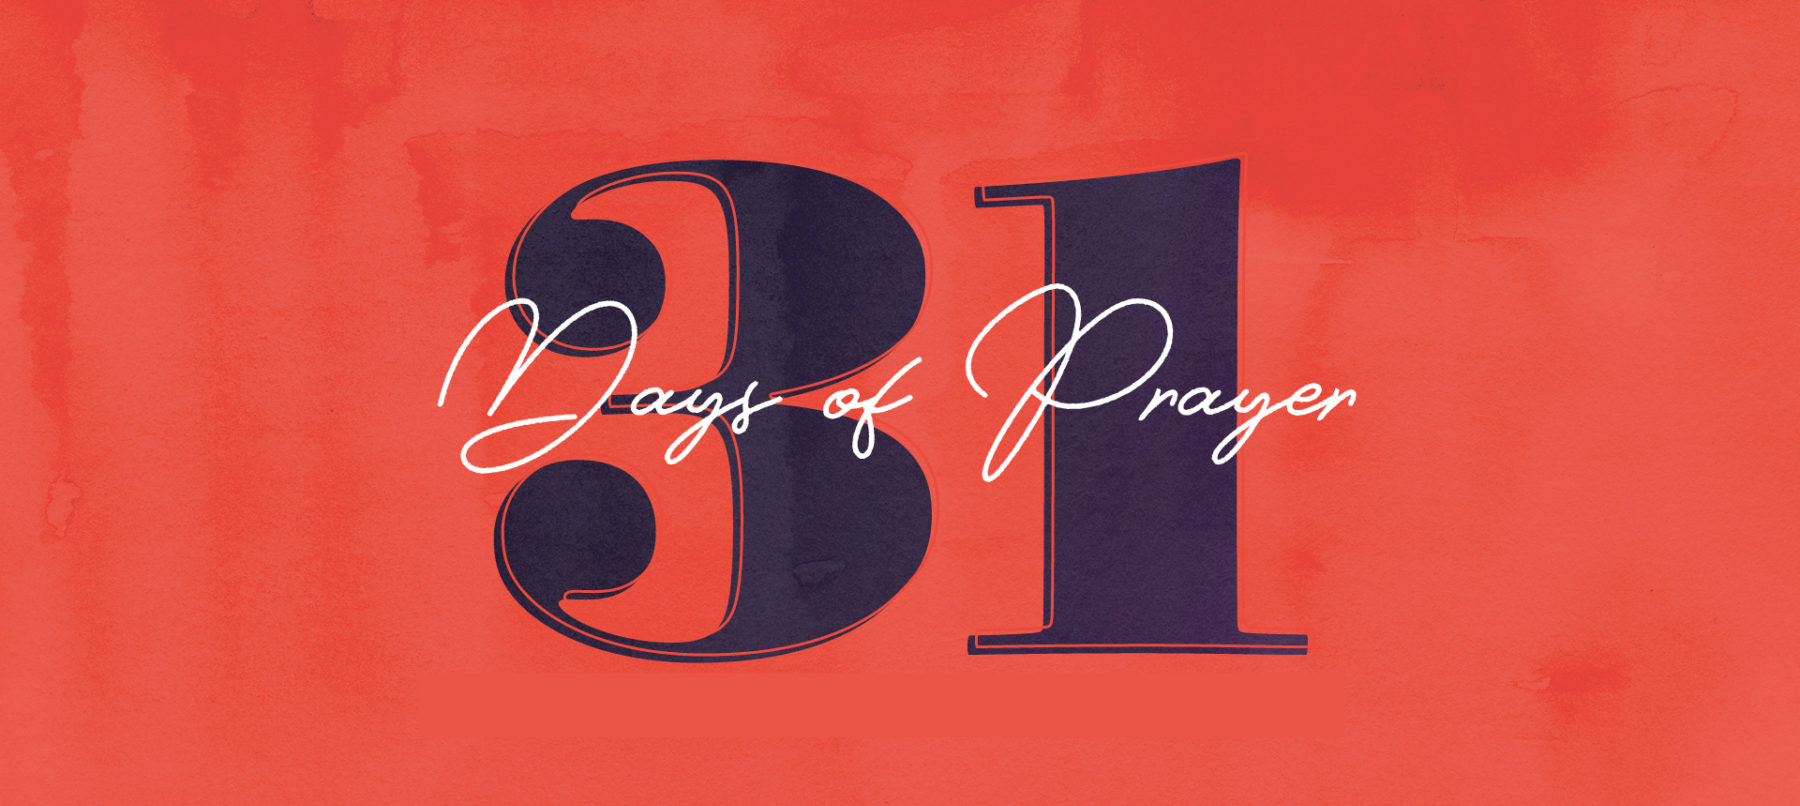 31 Days of Prayer Series 001